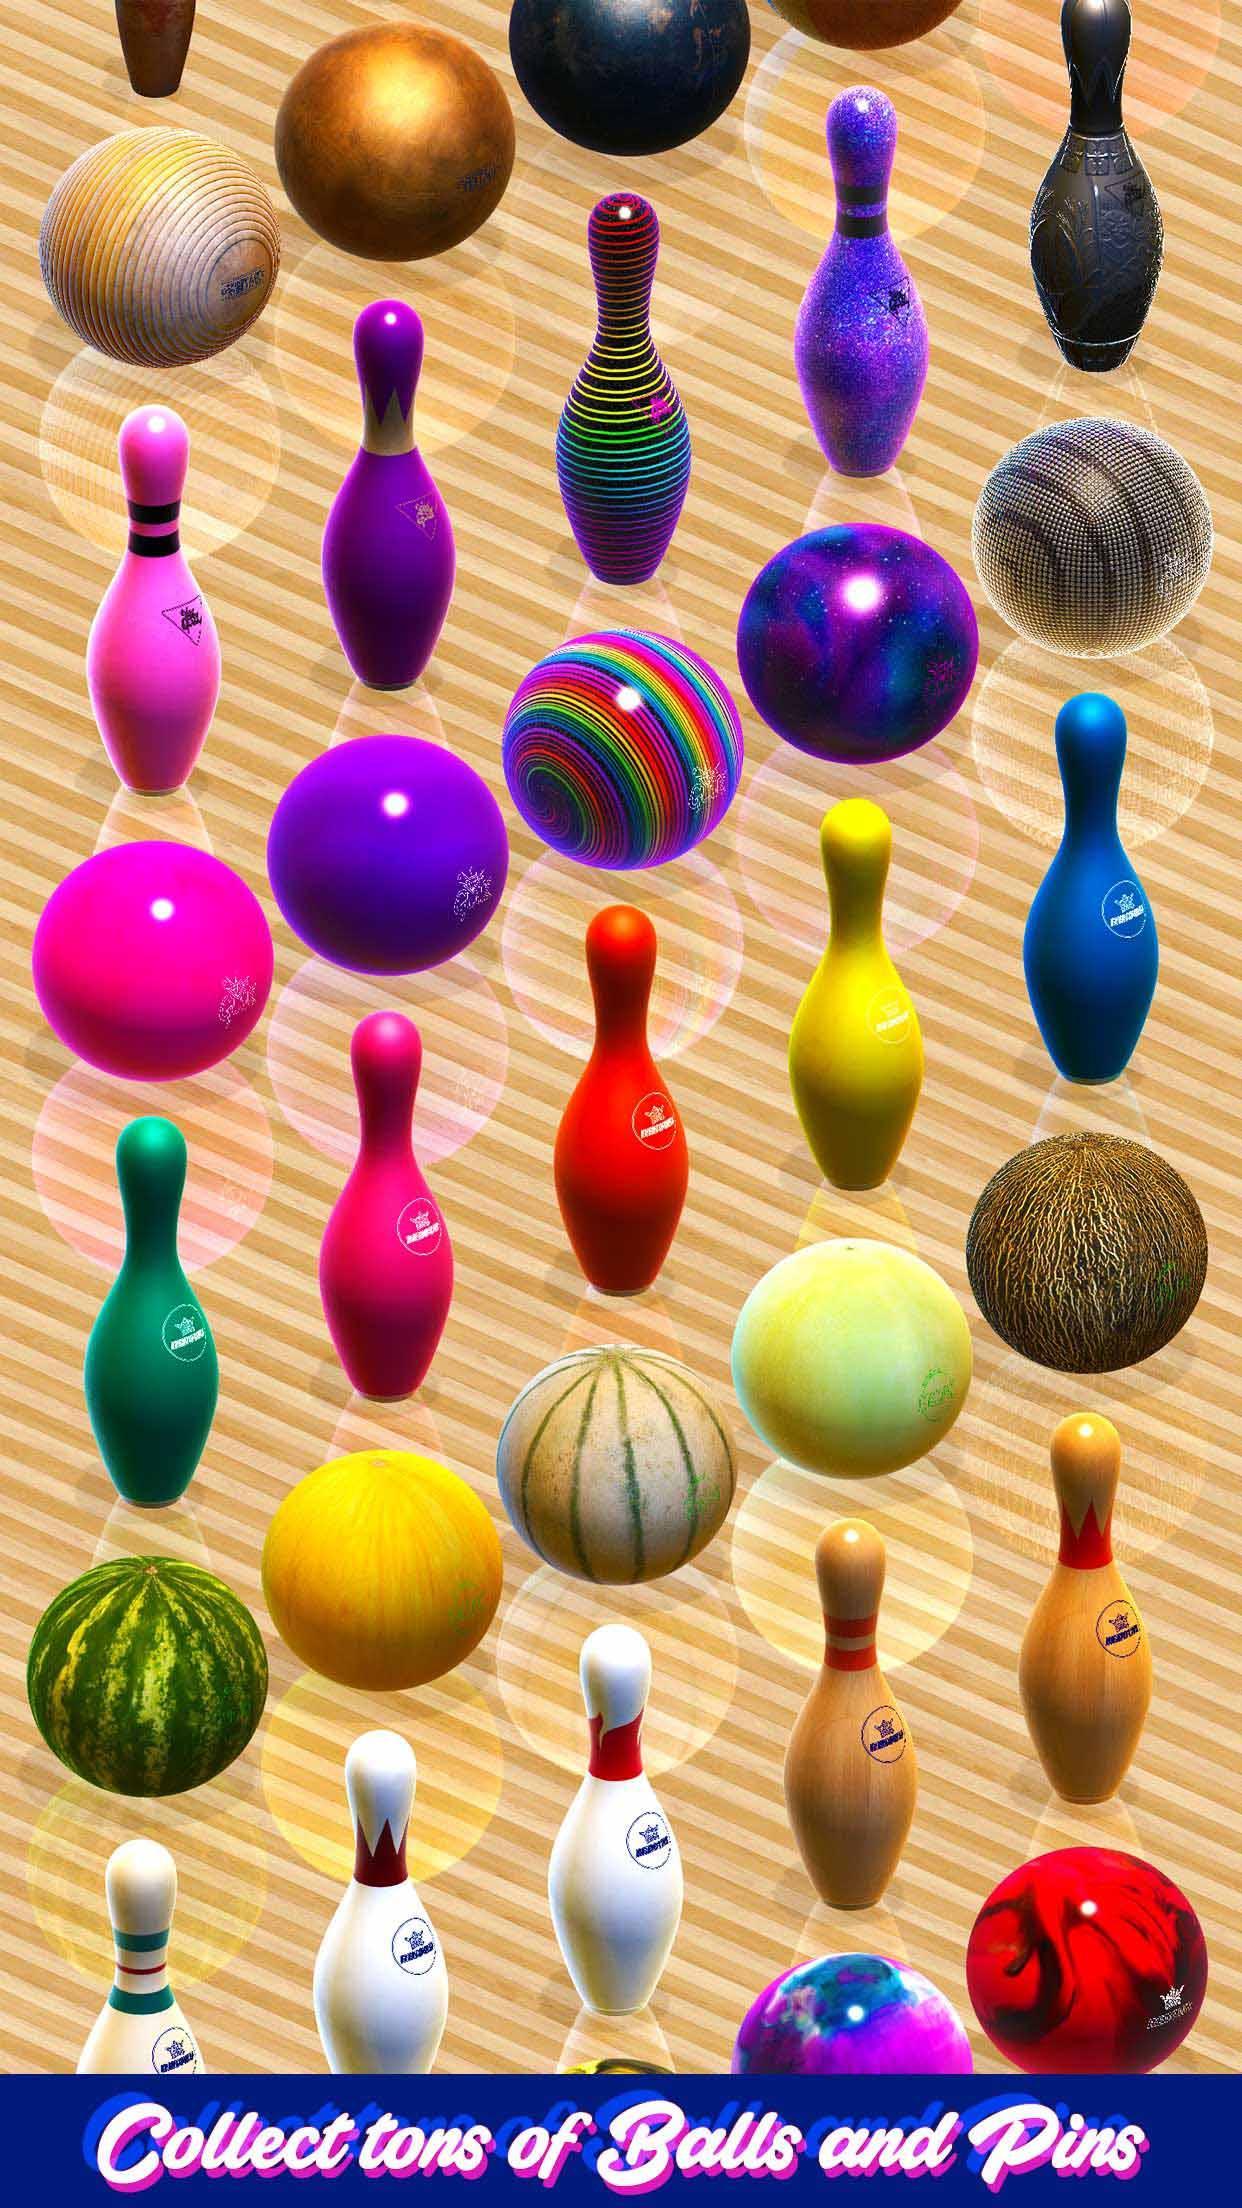 Bowling Go! - Best Realistic 10 Pin Bowling Games 0.3.0.1512 Screenshot 2